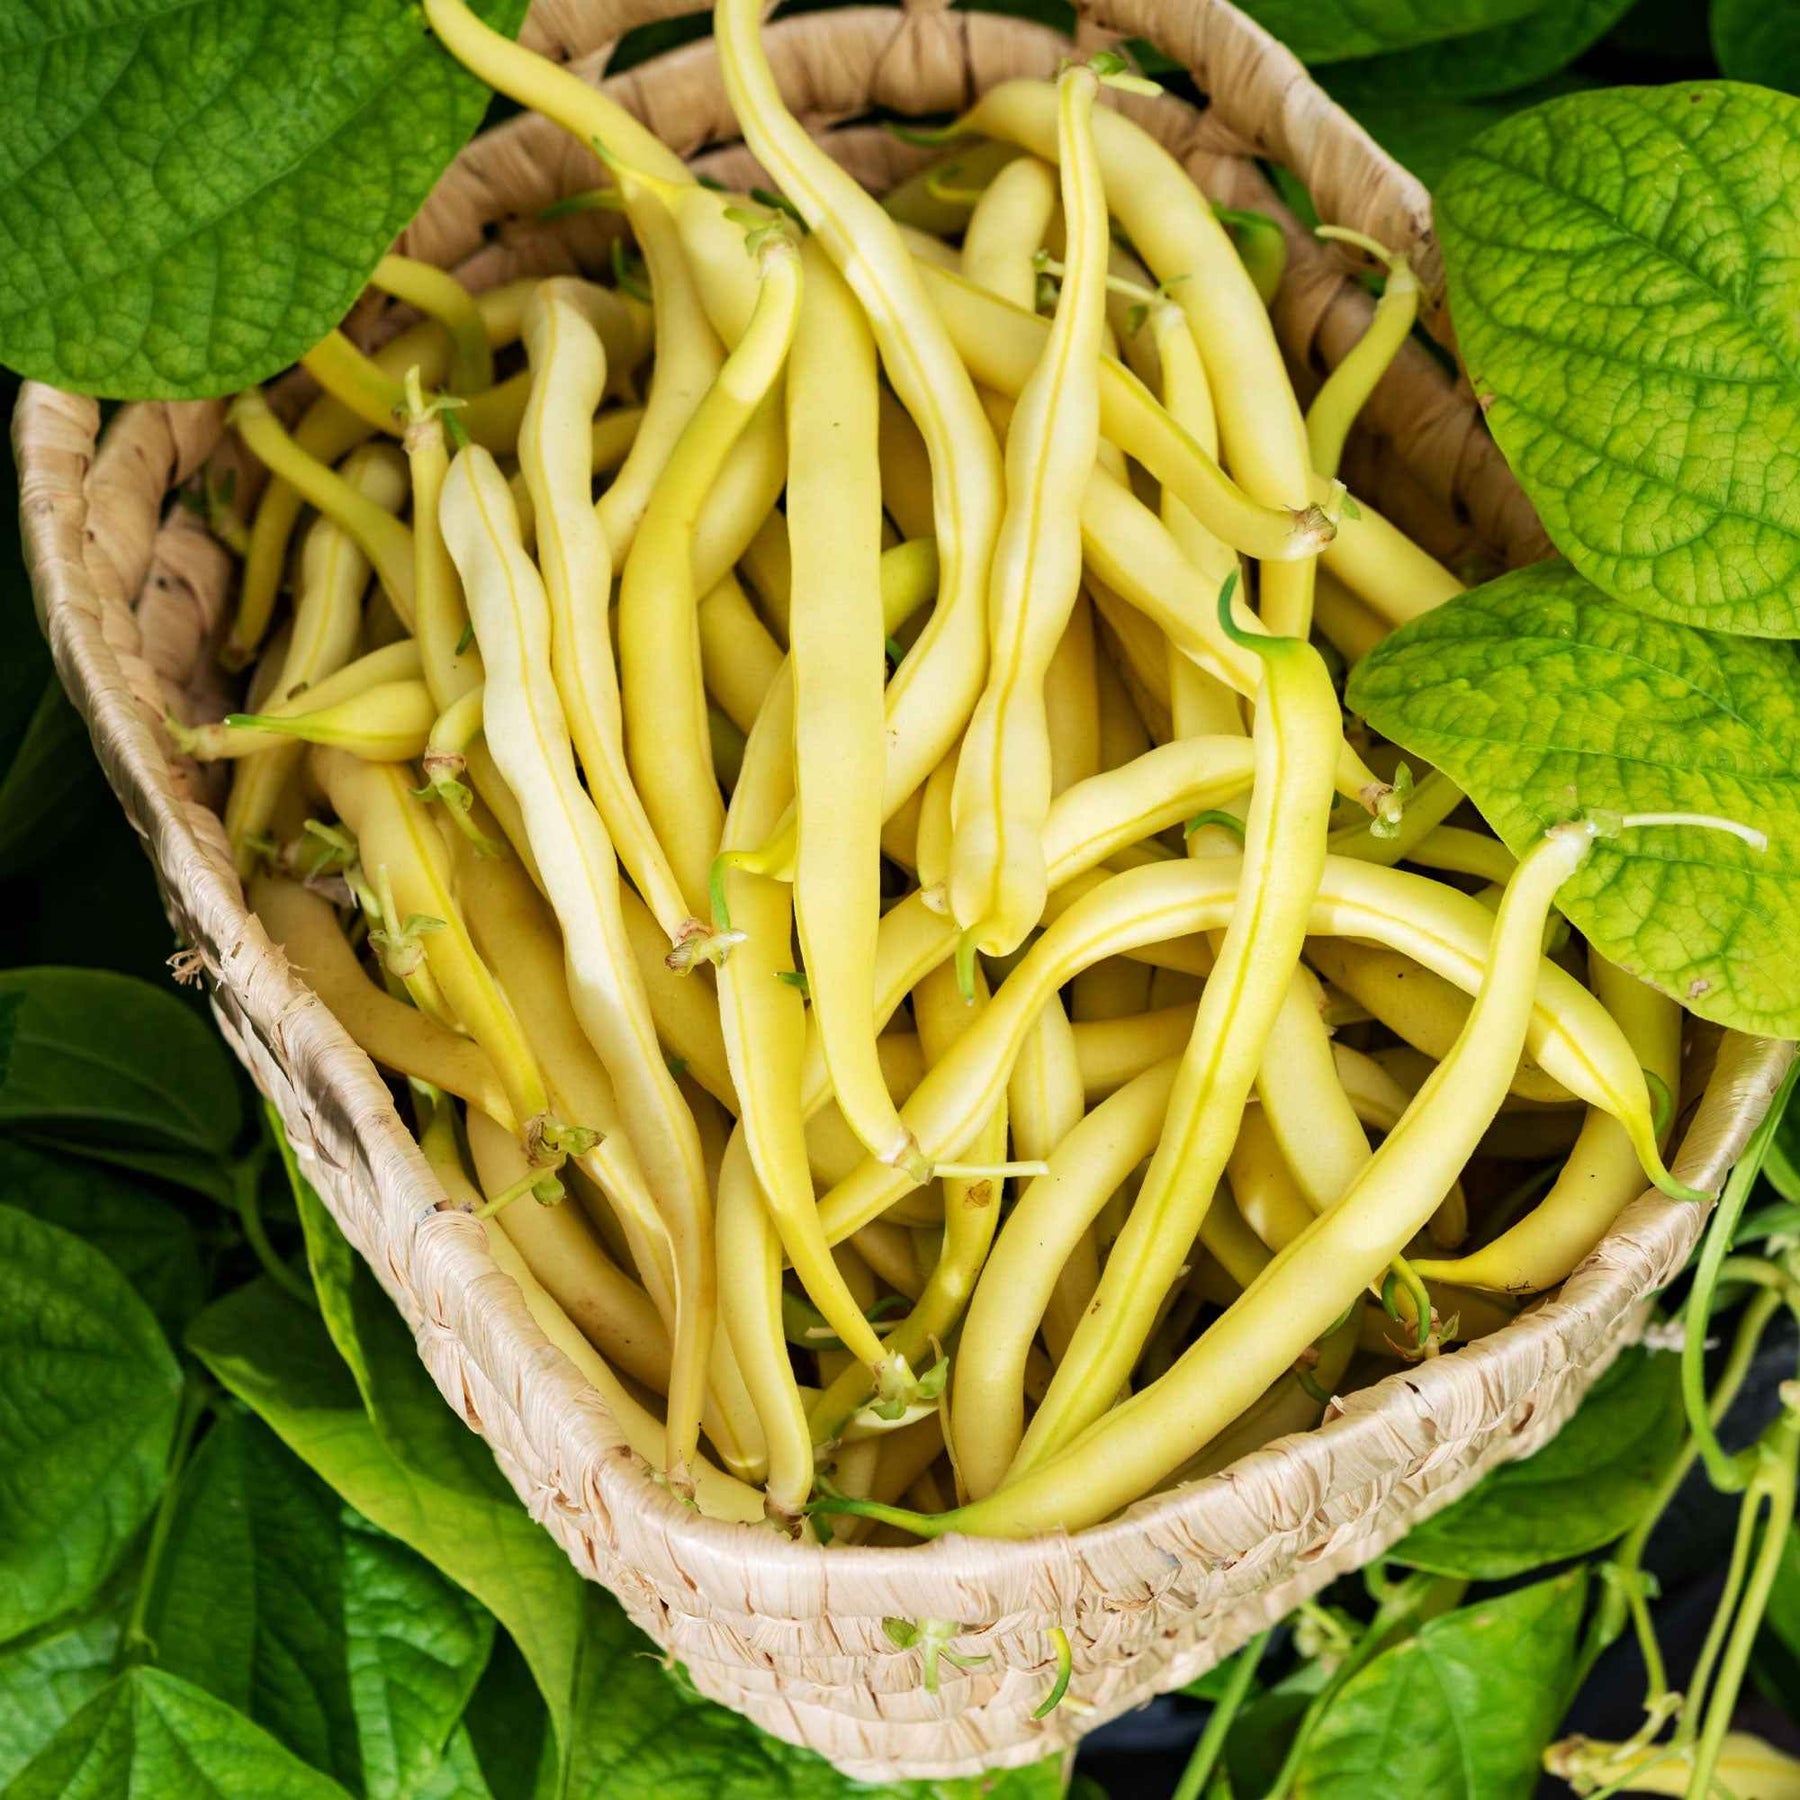 File:Nain jaune crop.jpg - Wikipedia